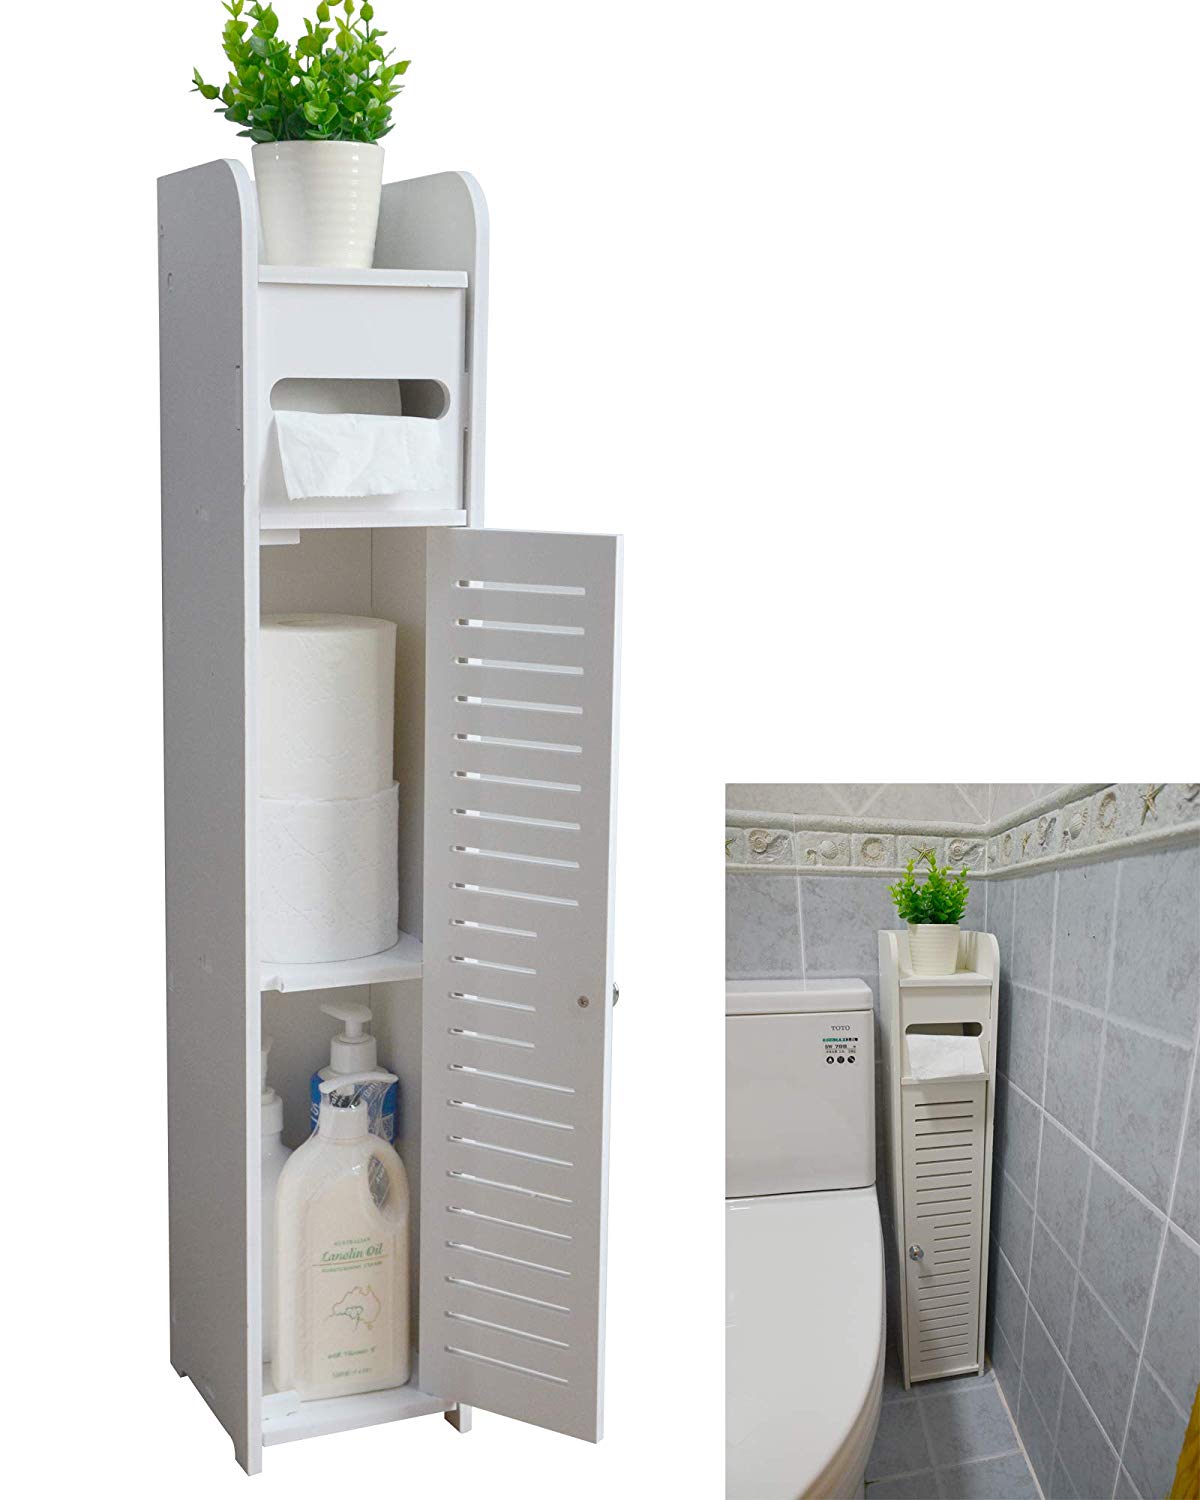 Bathroom Cabinet, Plunger Cabinet Storage, Toilet Paper Cabinet